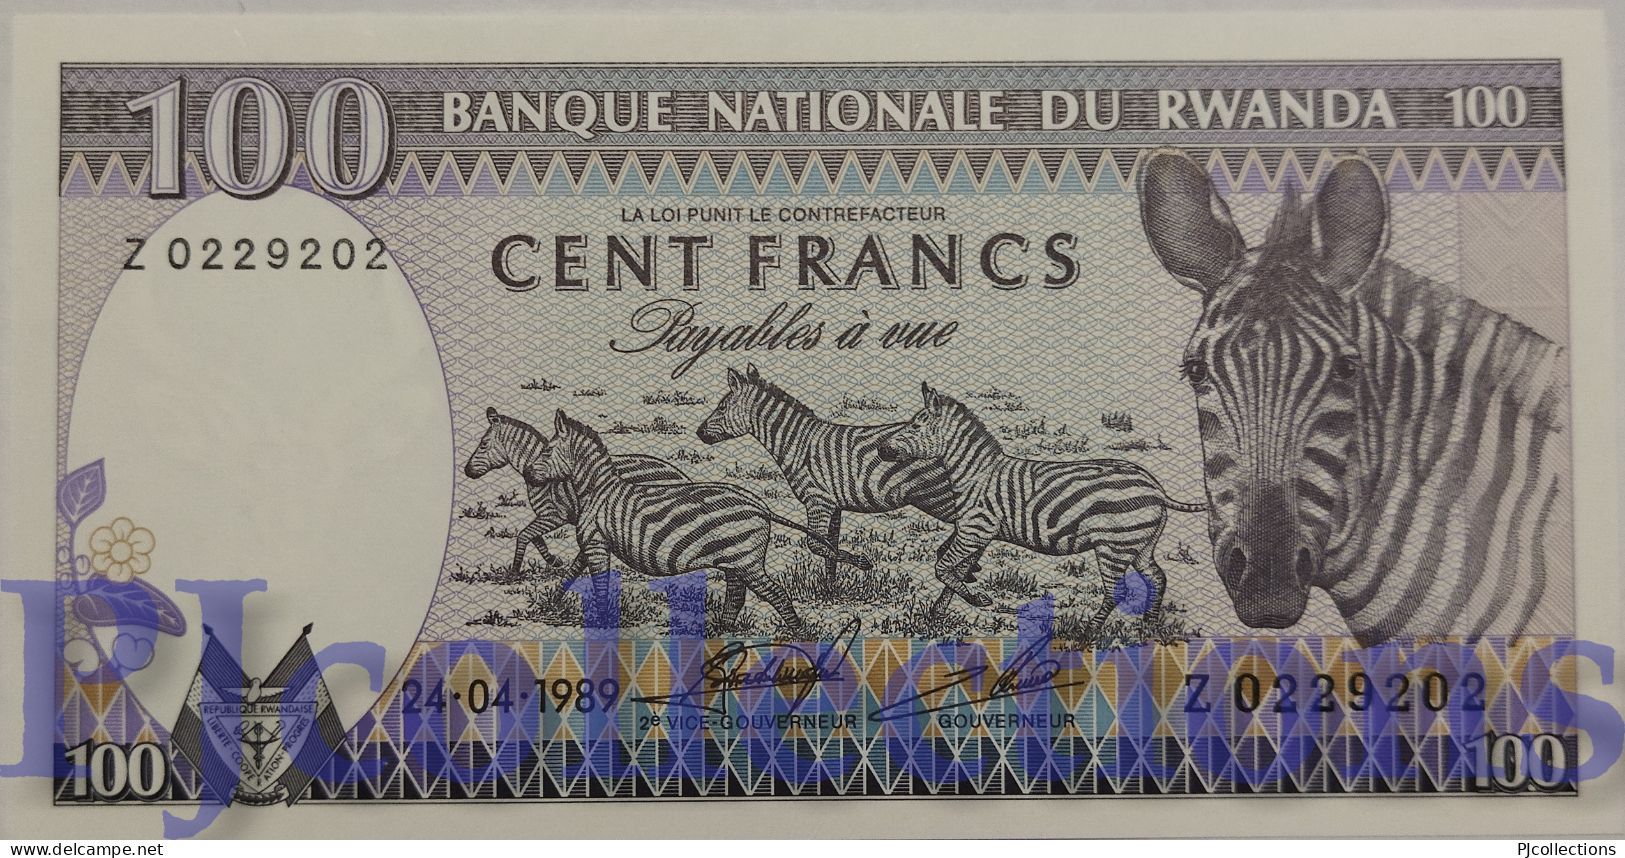 RWANDA 100 FRANCS 1989 PICK 19a REPLACEMENT UNC GOOD SERIAL NUMBER "Z0229202" - Ruanda